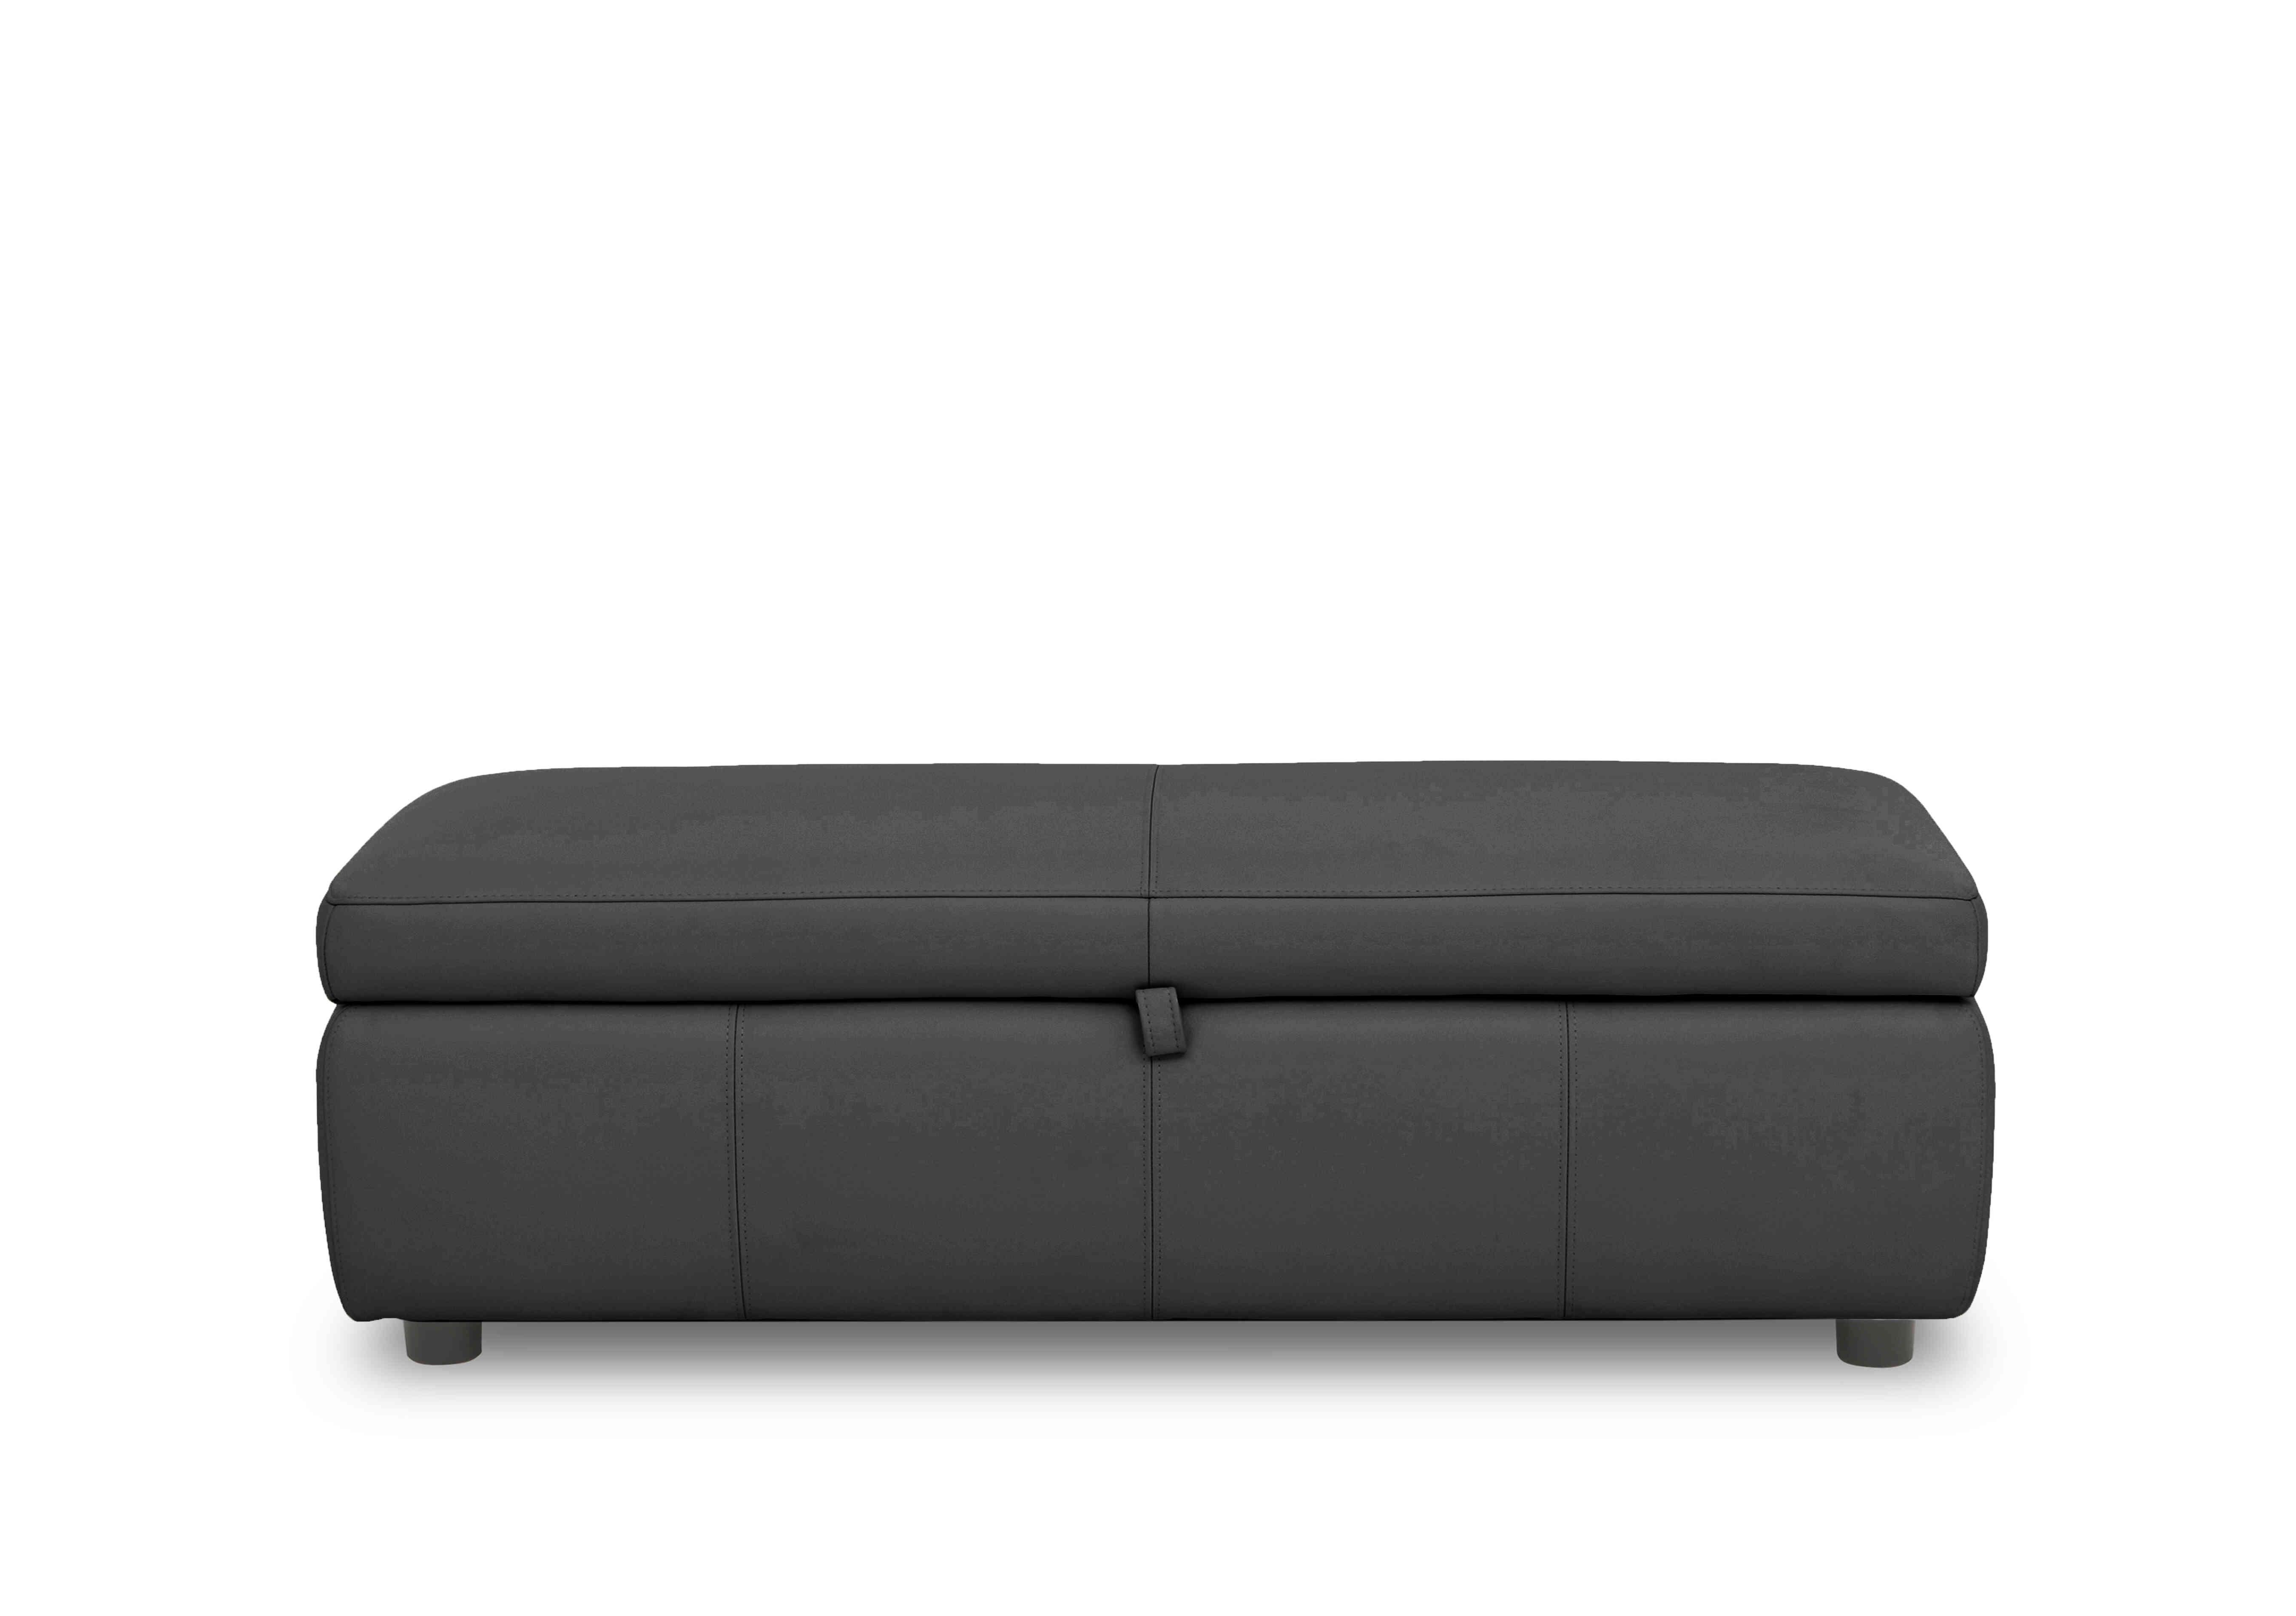 Stark 150cm Leather Blanket Box in Bv-3500 Classic Black on Furniture Village